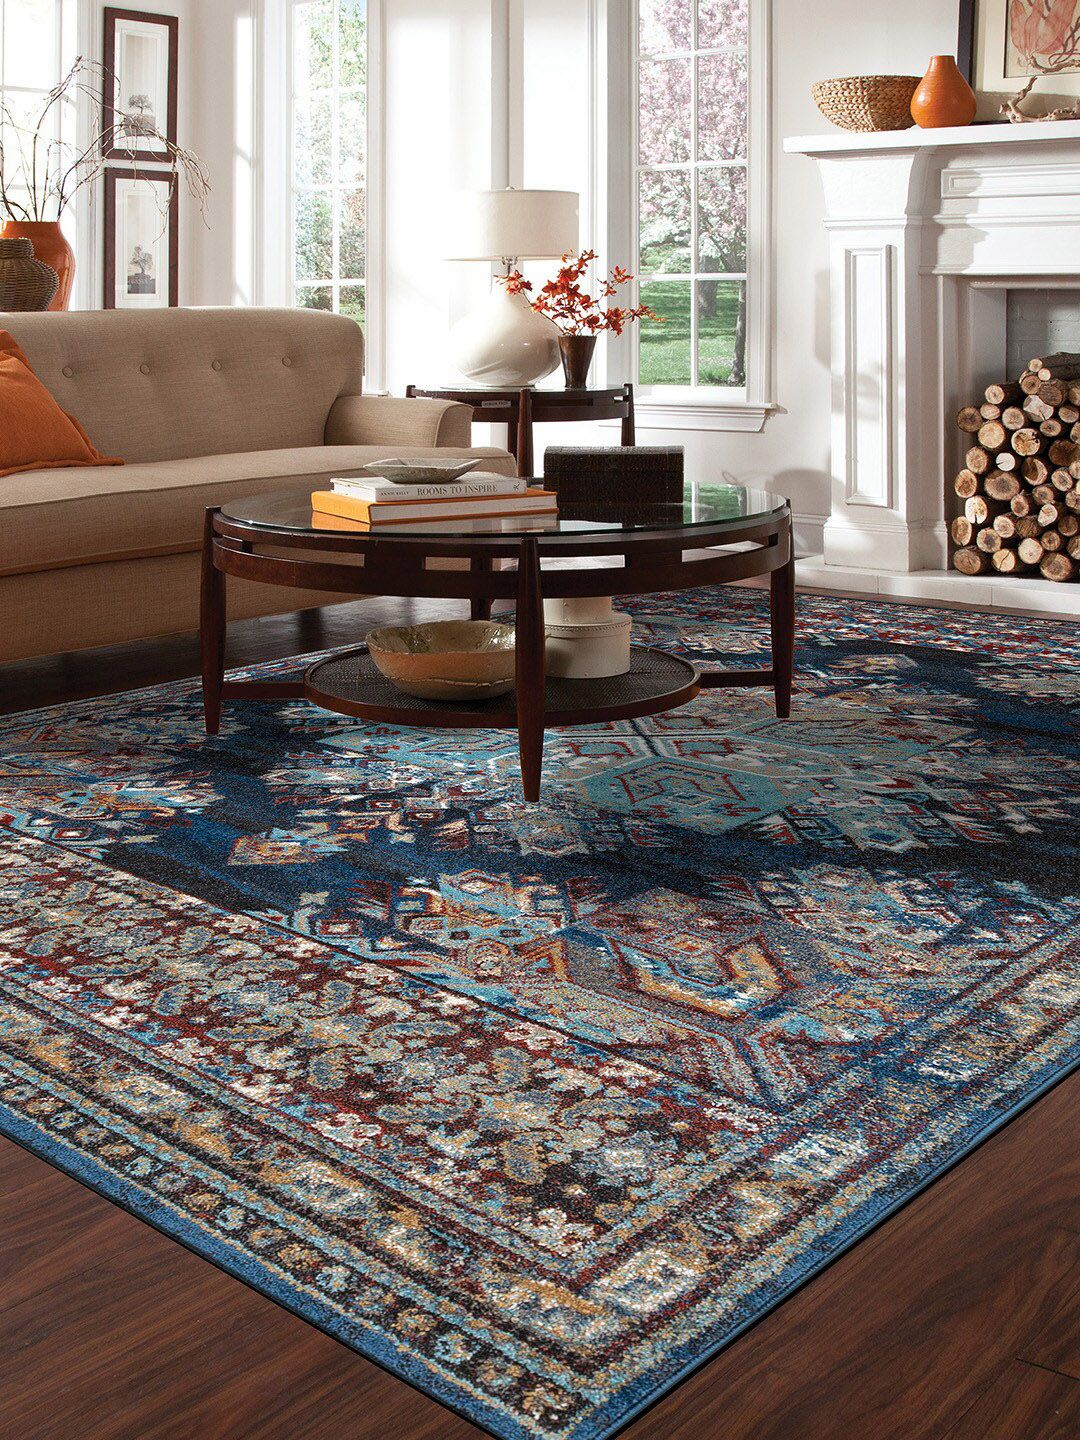 DDecor Blue & Brown Traditional Rectangular Polypropylene Carpet Price in India